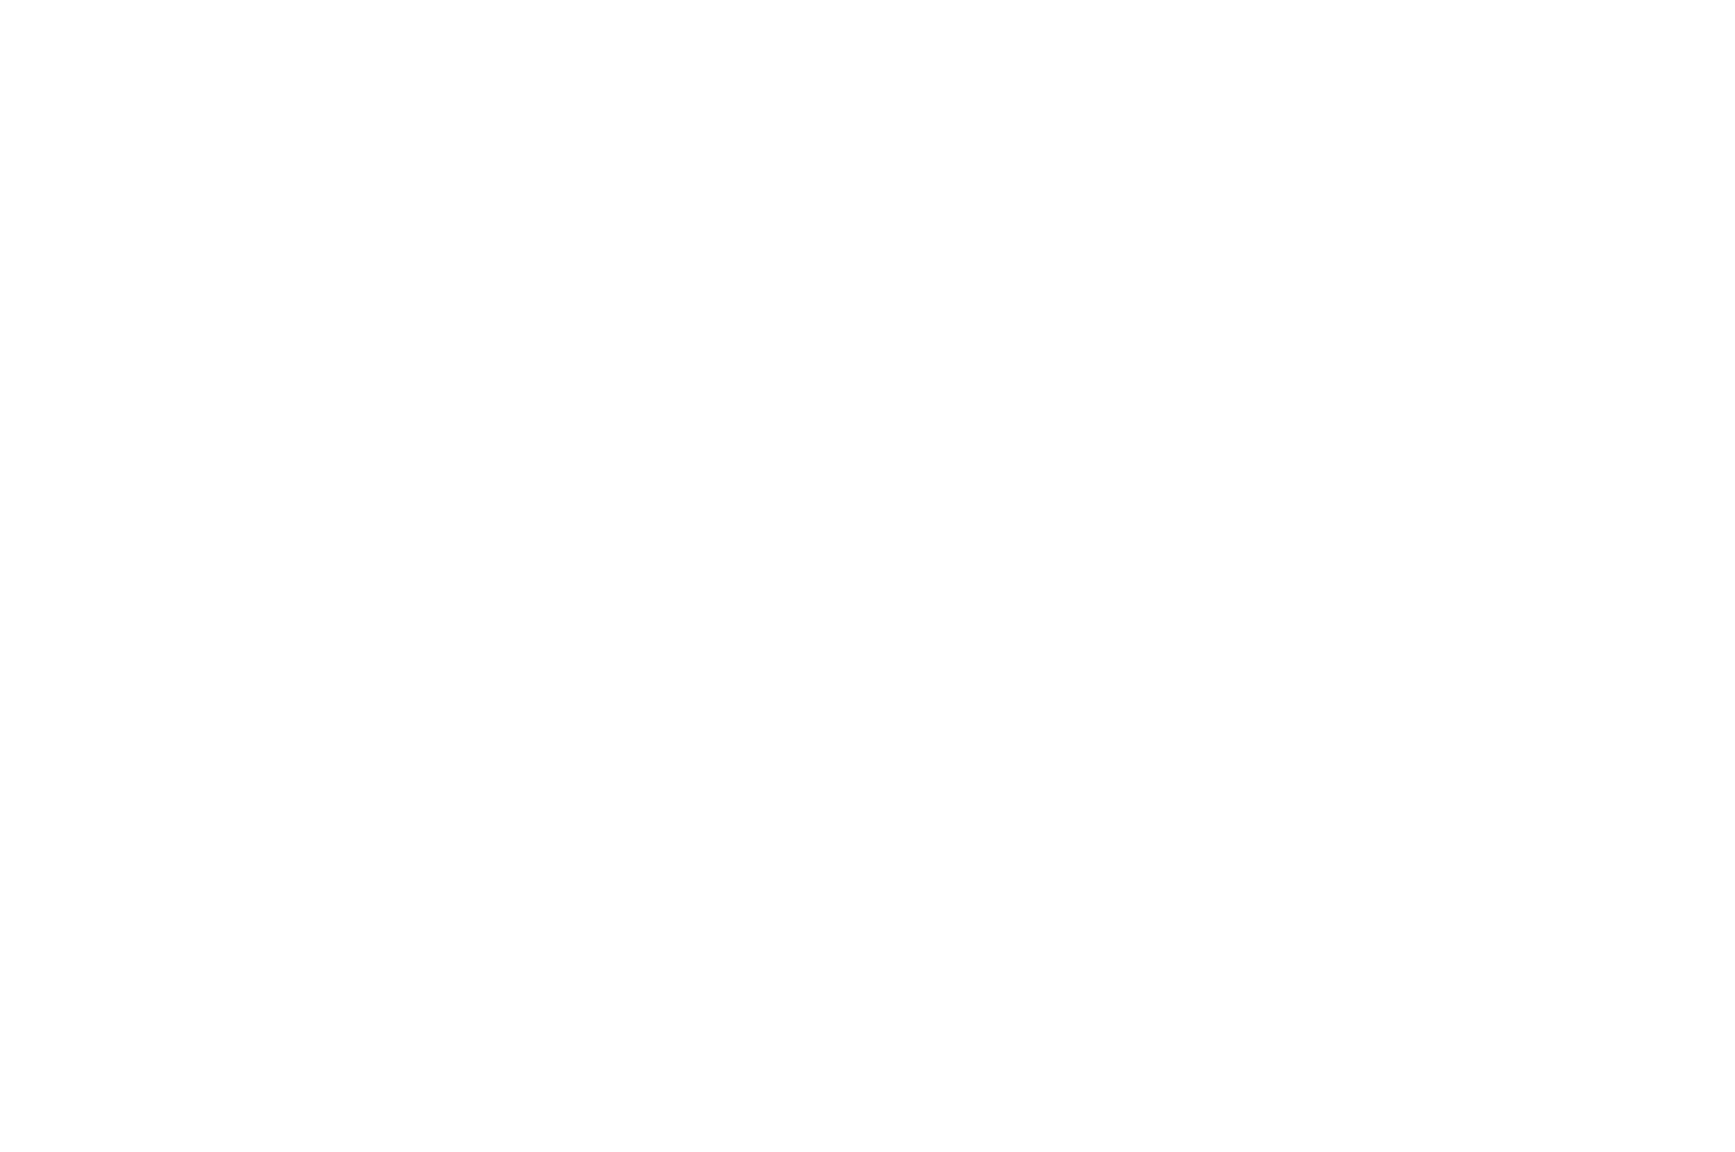 NOMINATED  - BEST FILM  - GROVE FILM FESTIVAL 2016.png